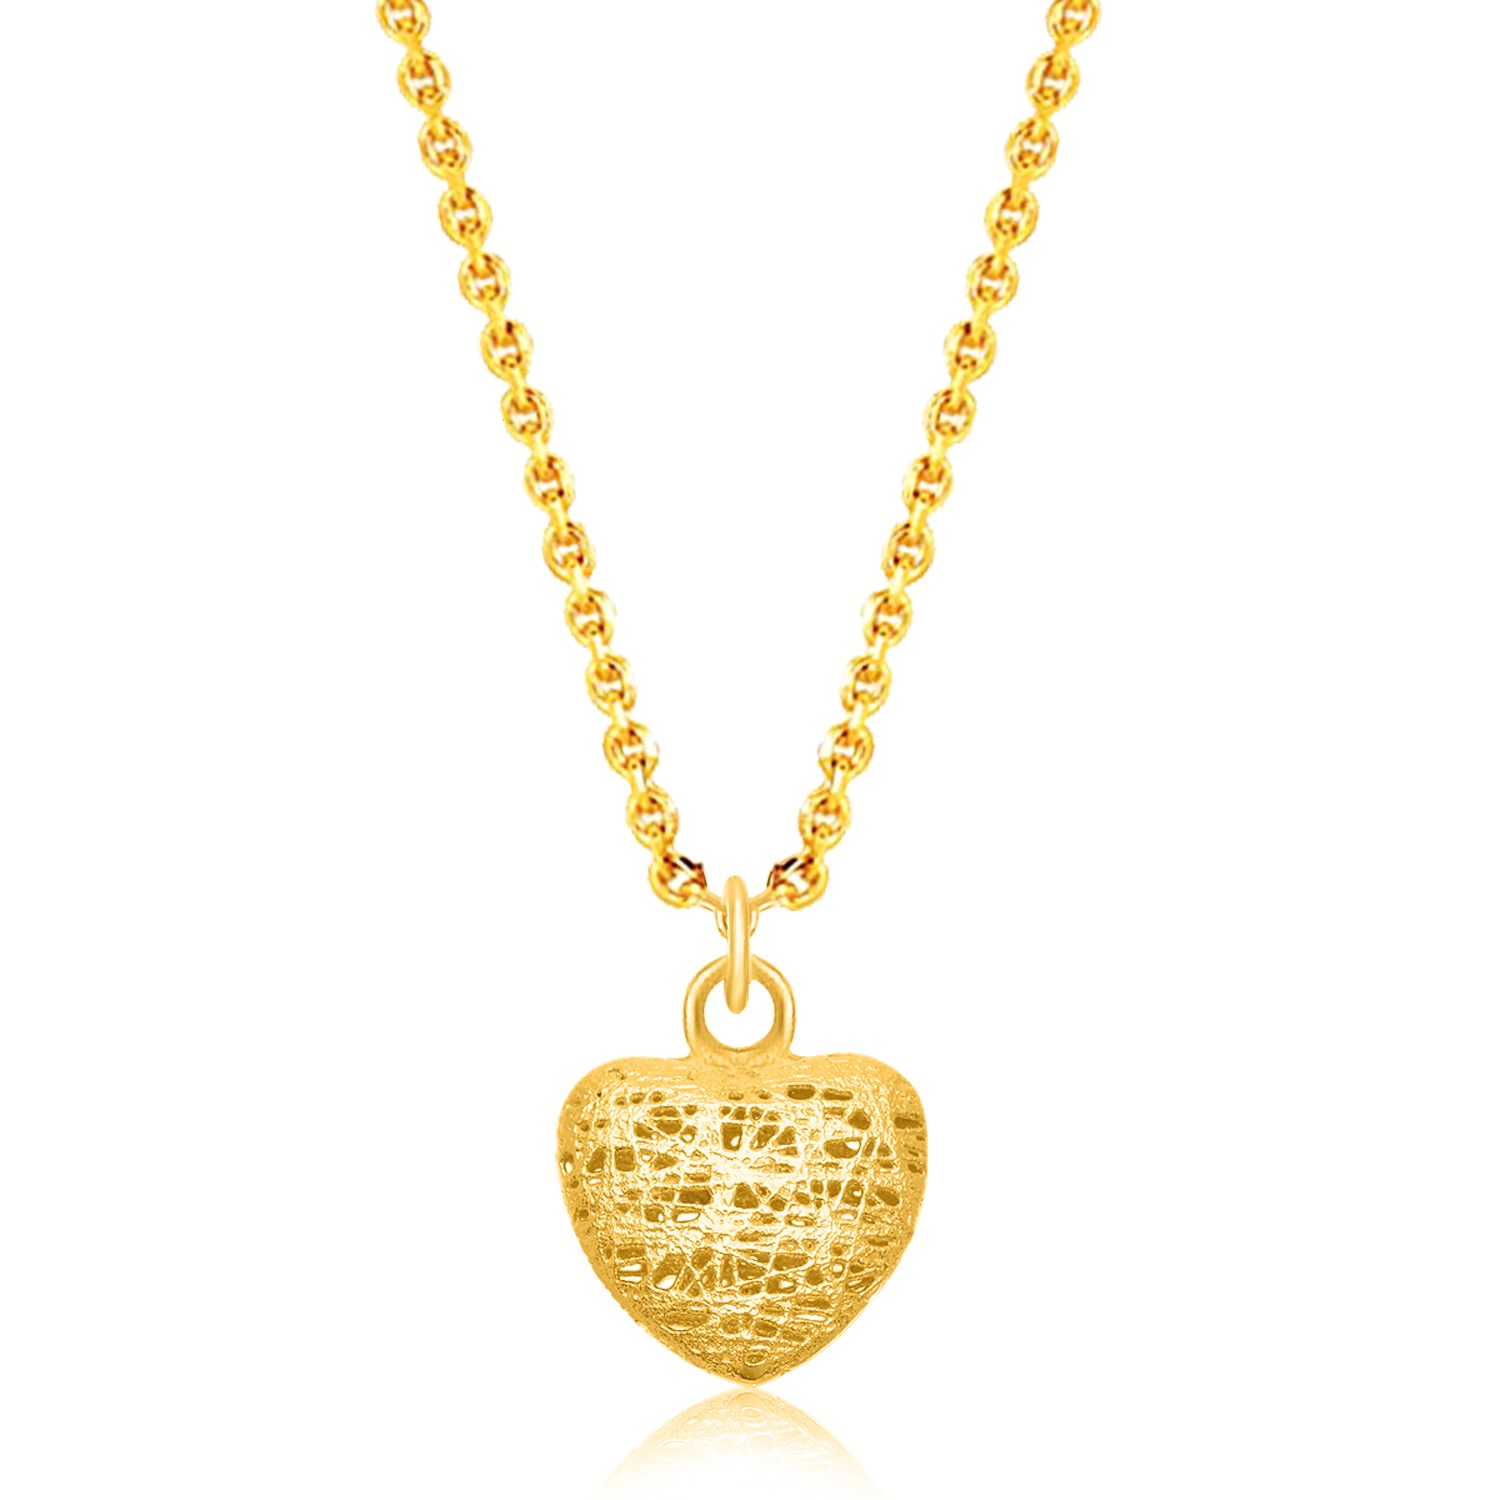 Mesh Motif Puffed Heart Pendant in 14k Yellow Gold - Richard Cannon Jewelry